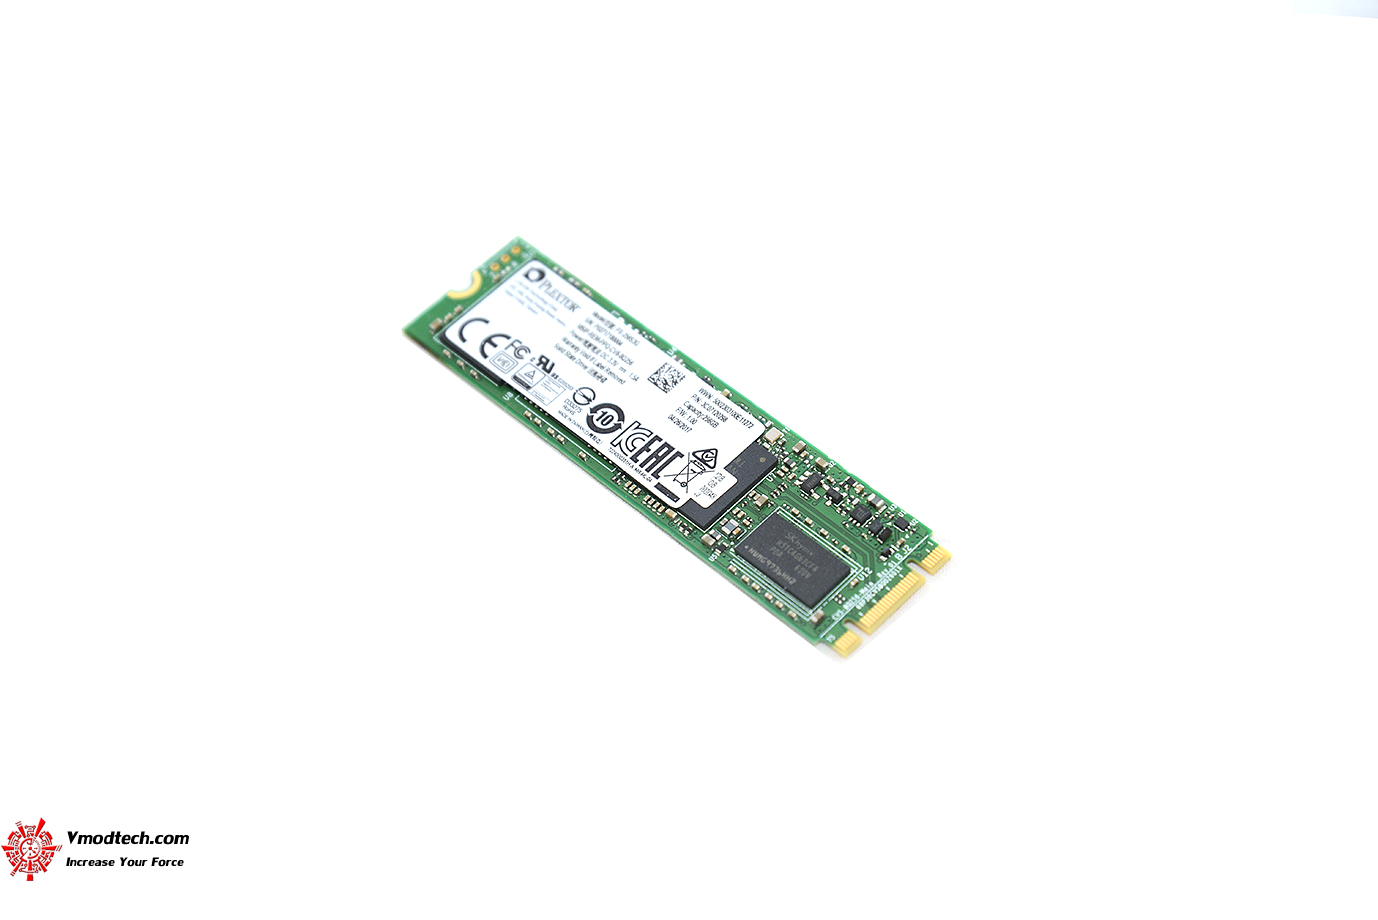 dsc 1751 PLEXTOR S3 M.2 SSD 256 GB REVIEW 